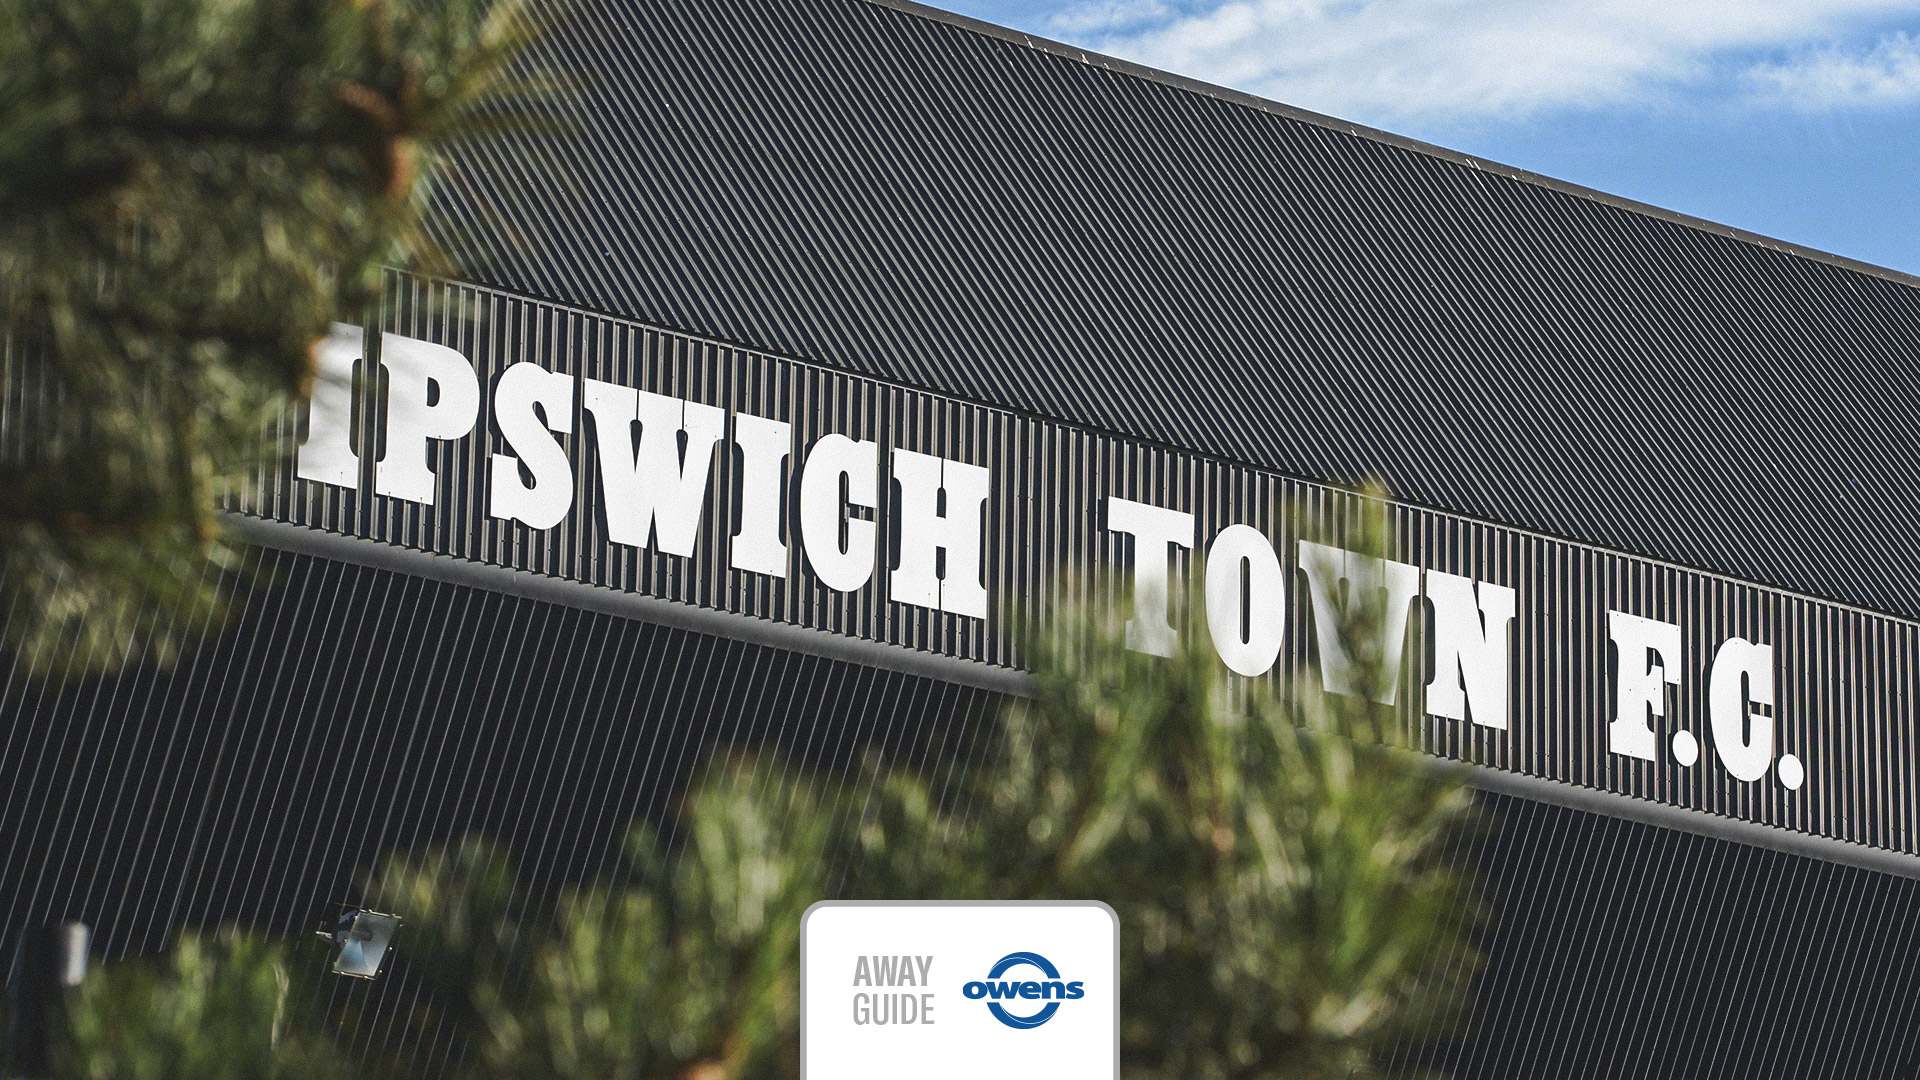 Ipswich Town away guide